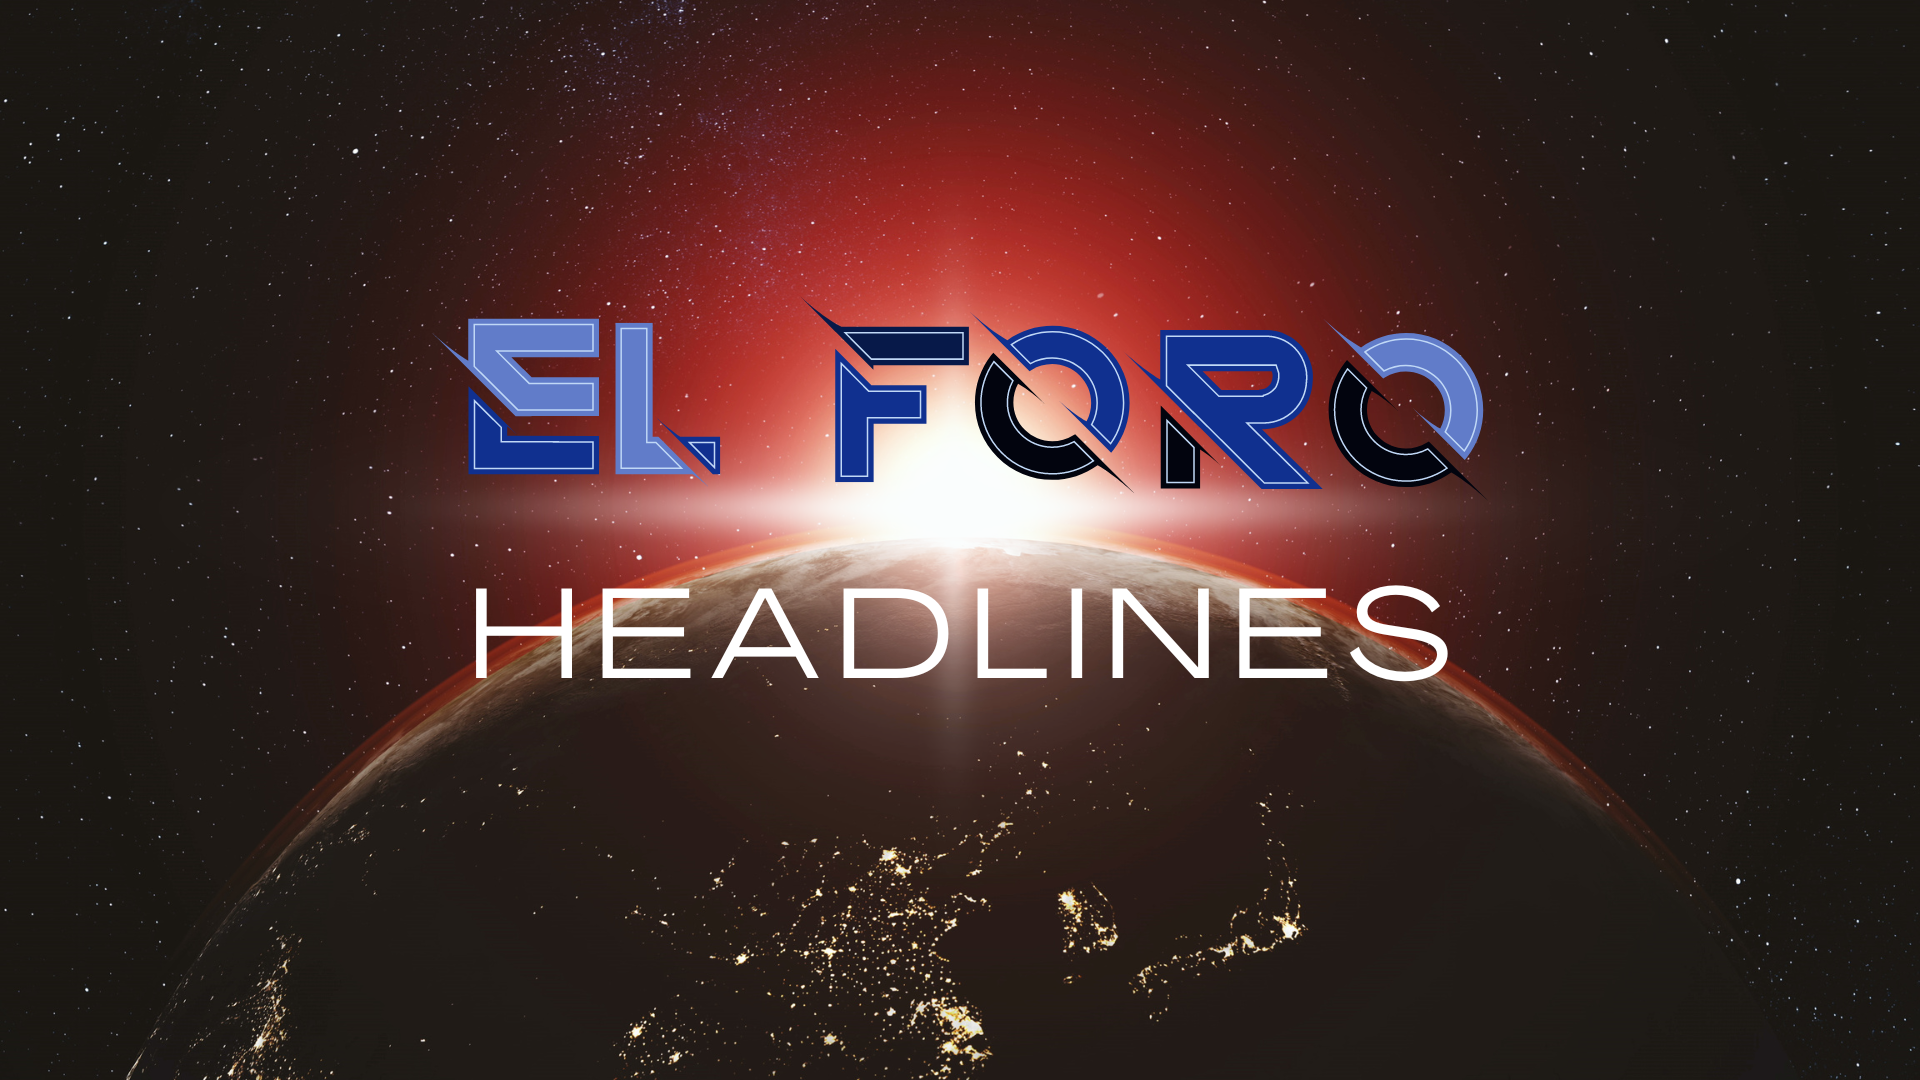 El Foro Headlines